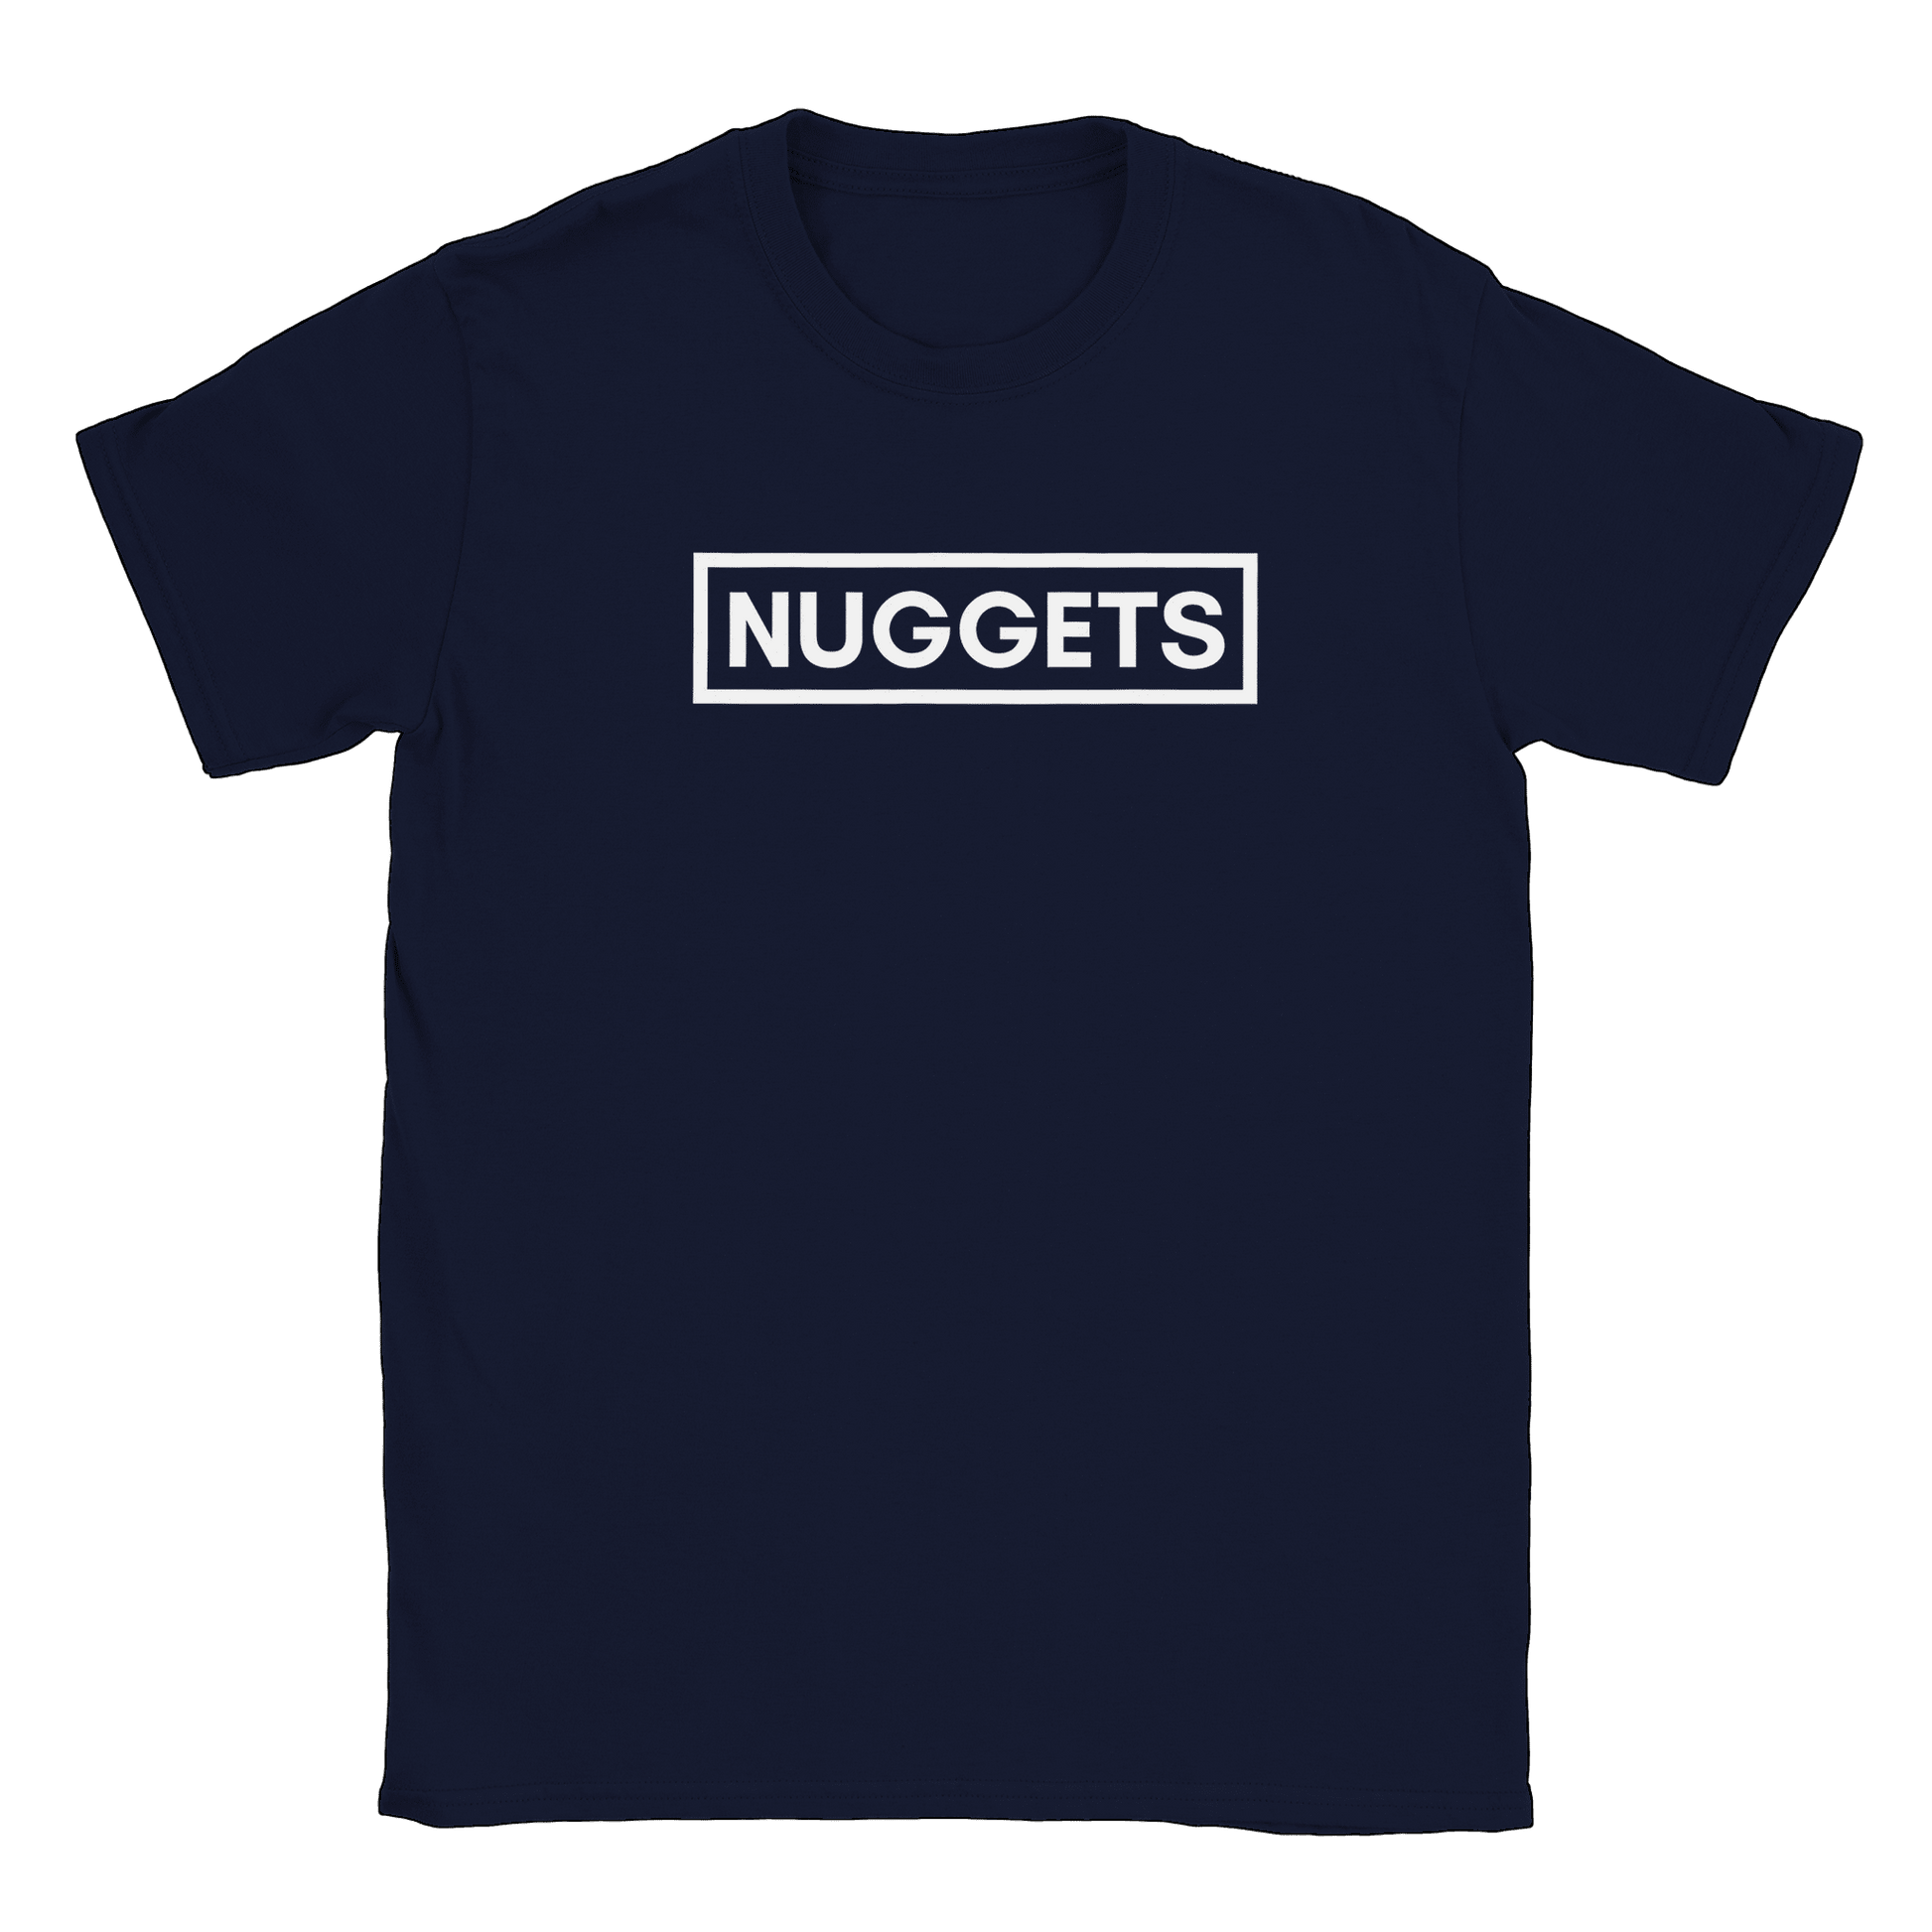 Nuggets - T-shirt Navy